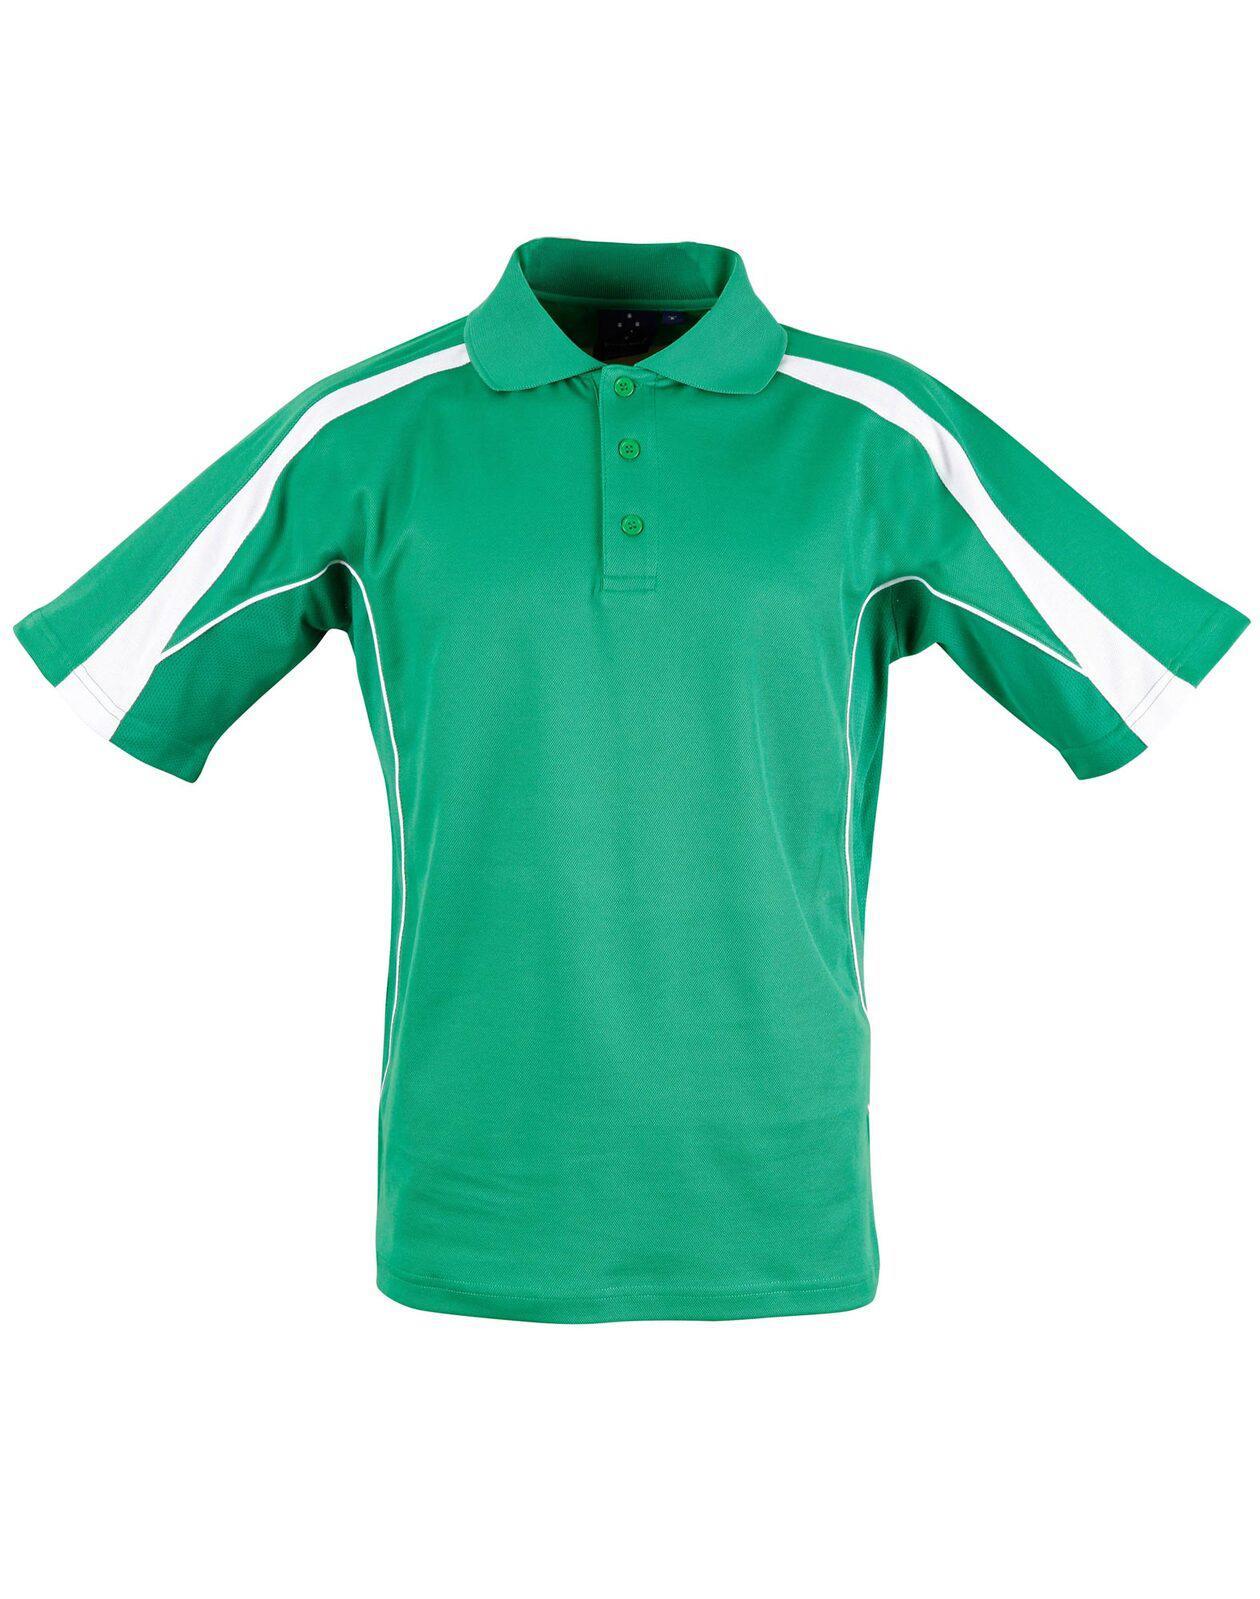 PS53K Sz 06K LEGEND Polyester Cotton Kid's Polo Shirt Emerald Green/White